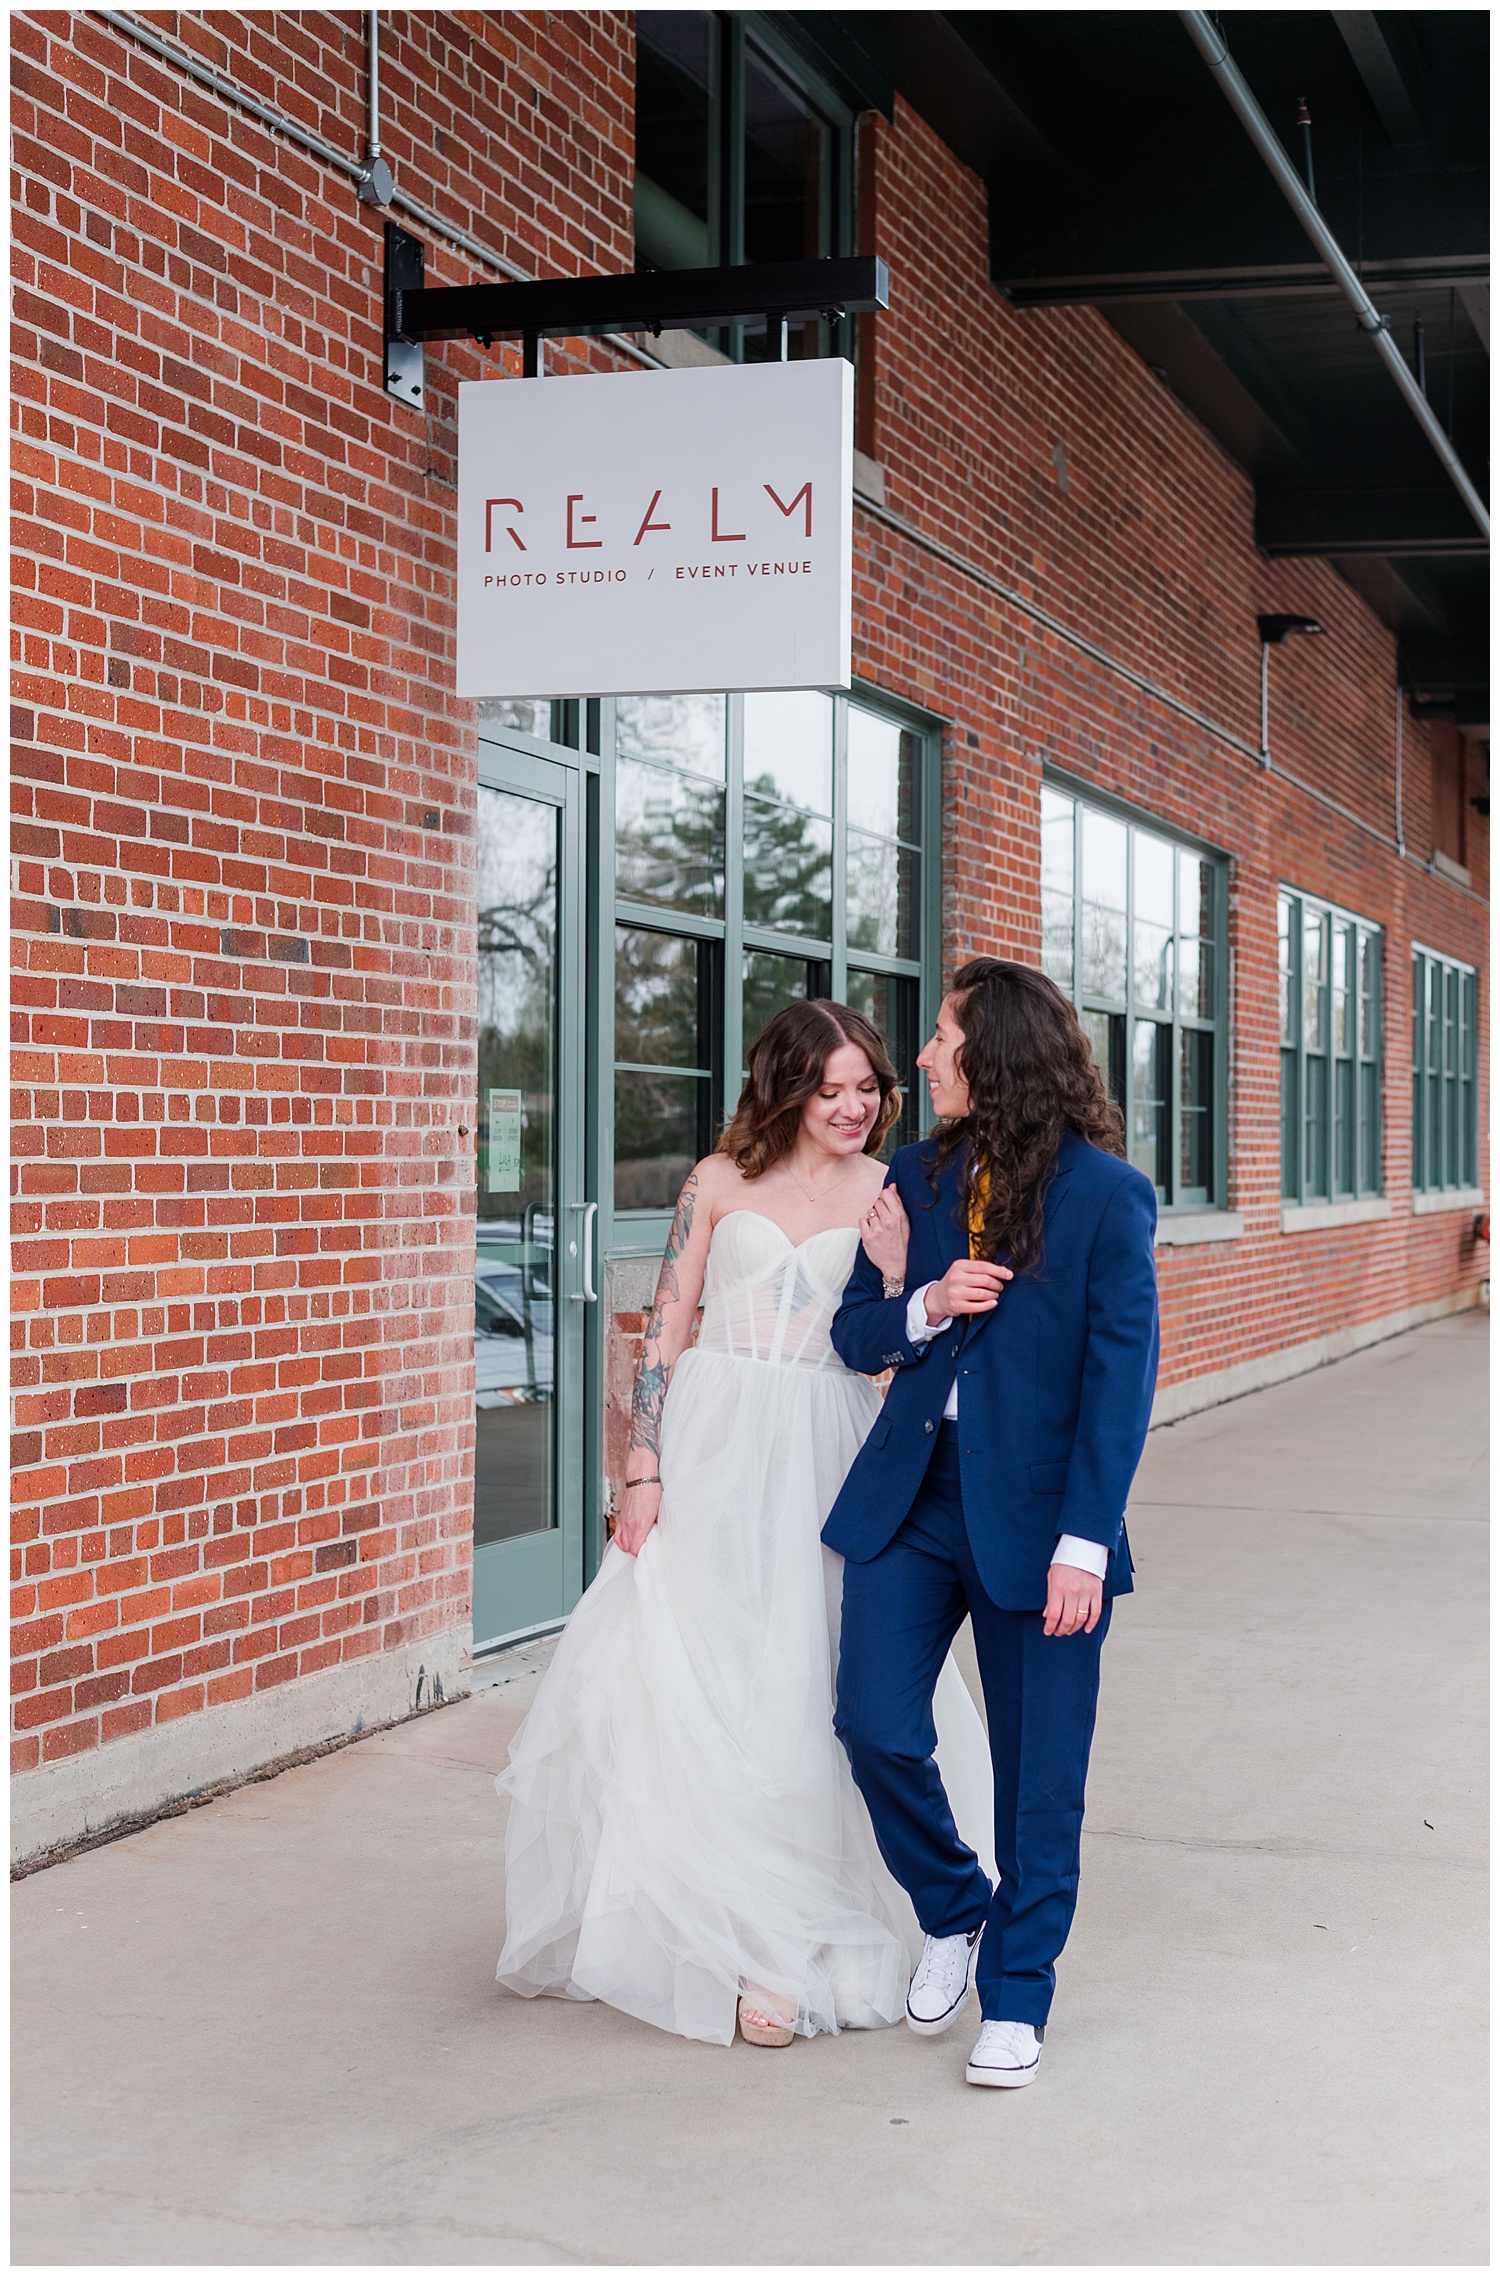 A couple walks along the sidewalk at Realm Denver arm in arm in wedding attire